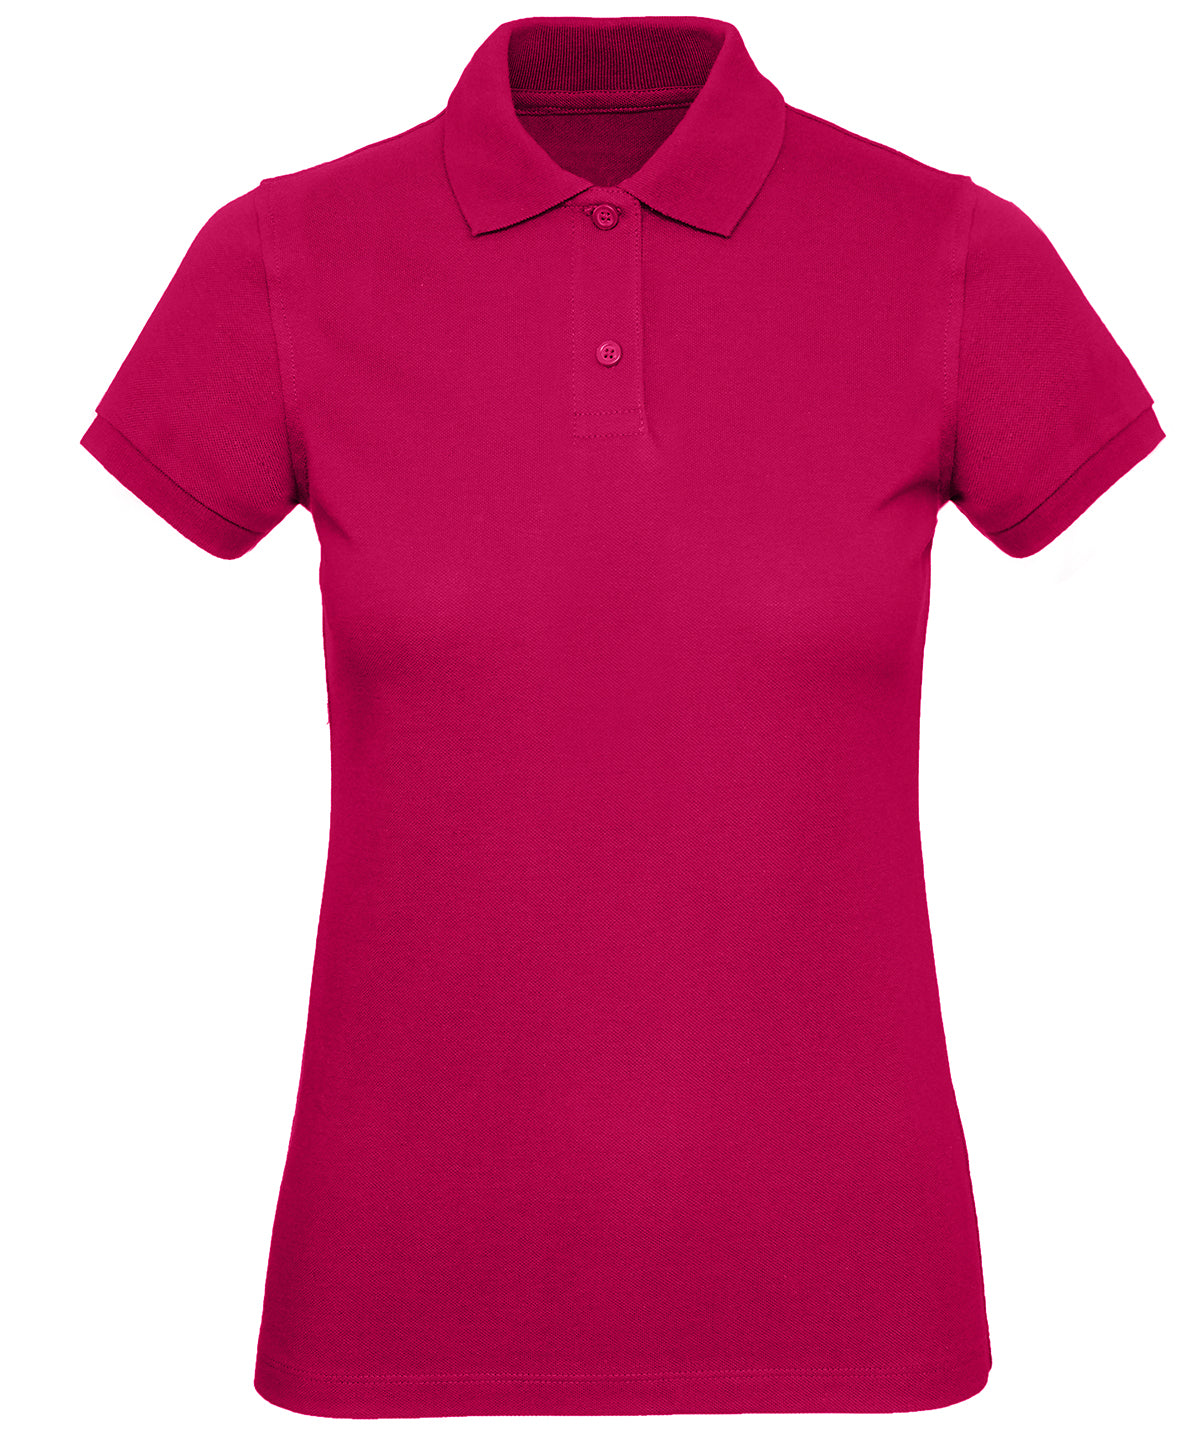 Personalised Polo Shirts - Dark Orange B&C Collection B&C Inspire Polo /women